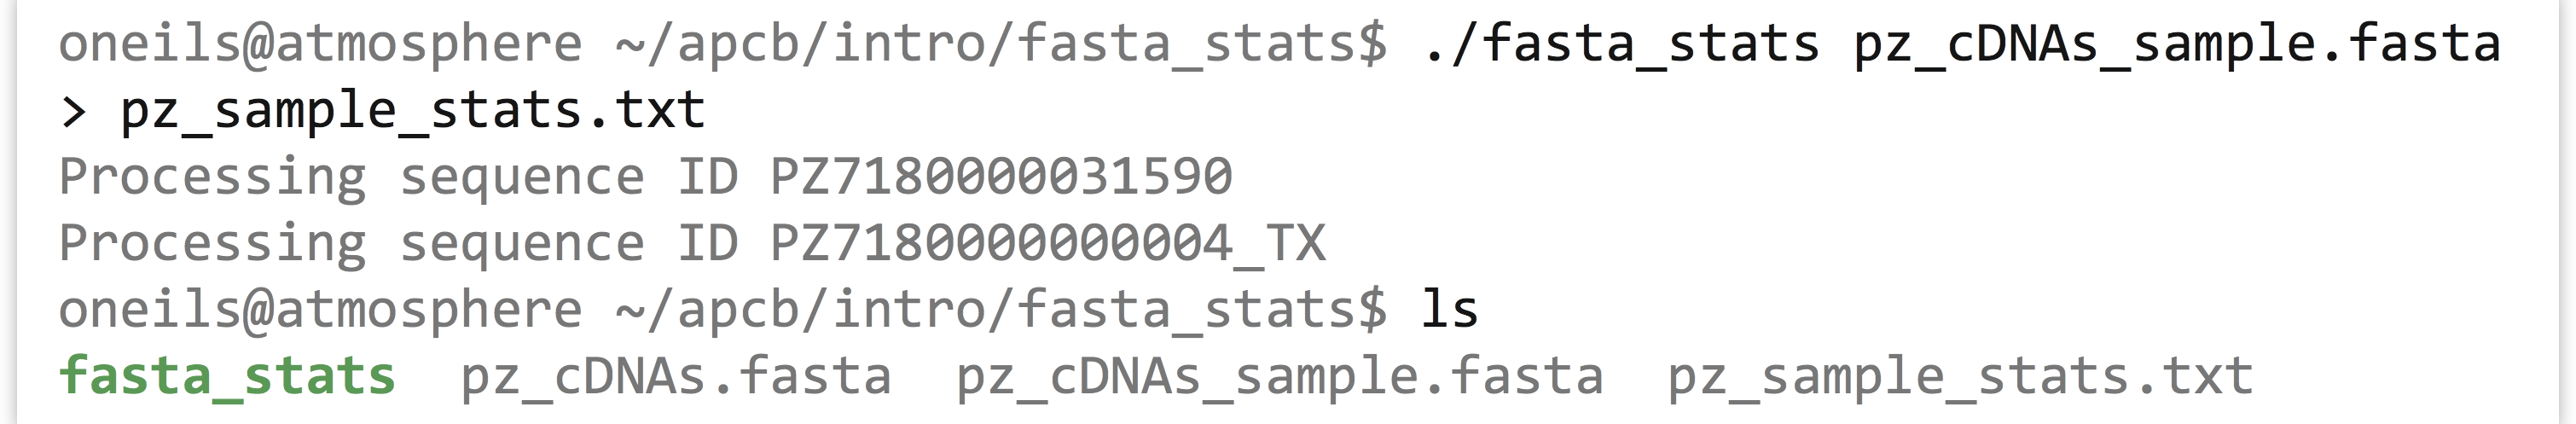 I.8_3_unix_97_fasta_stats_sample_redirect